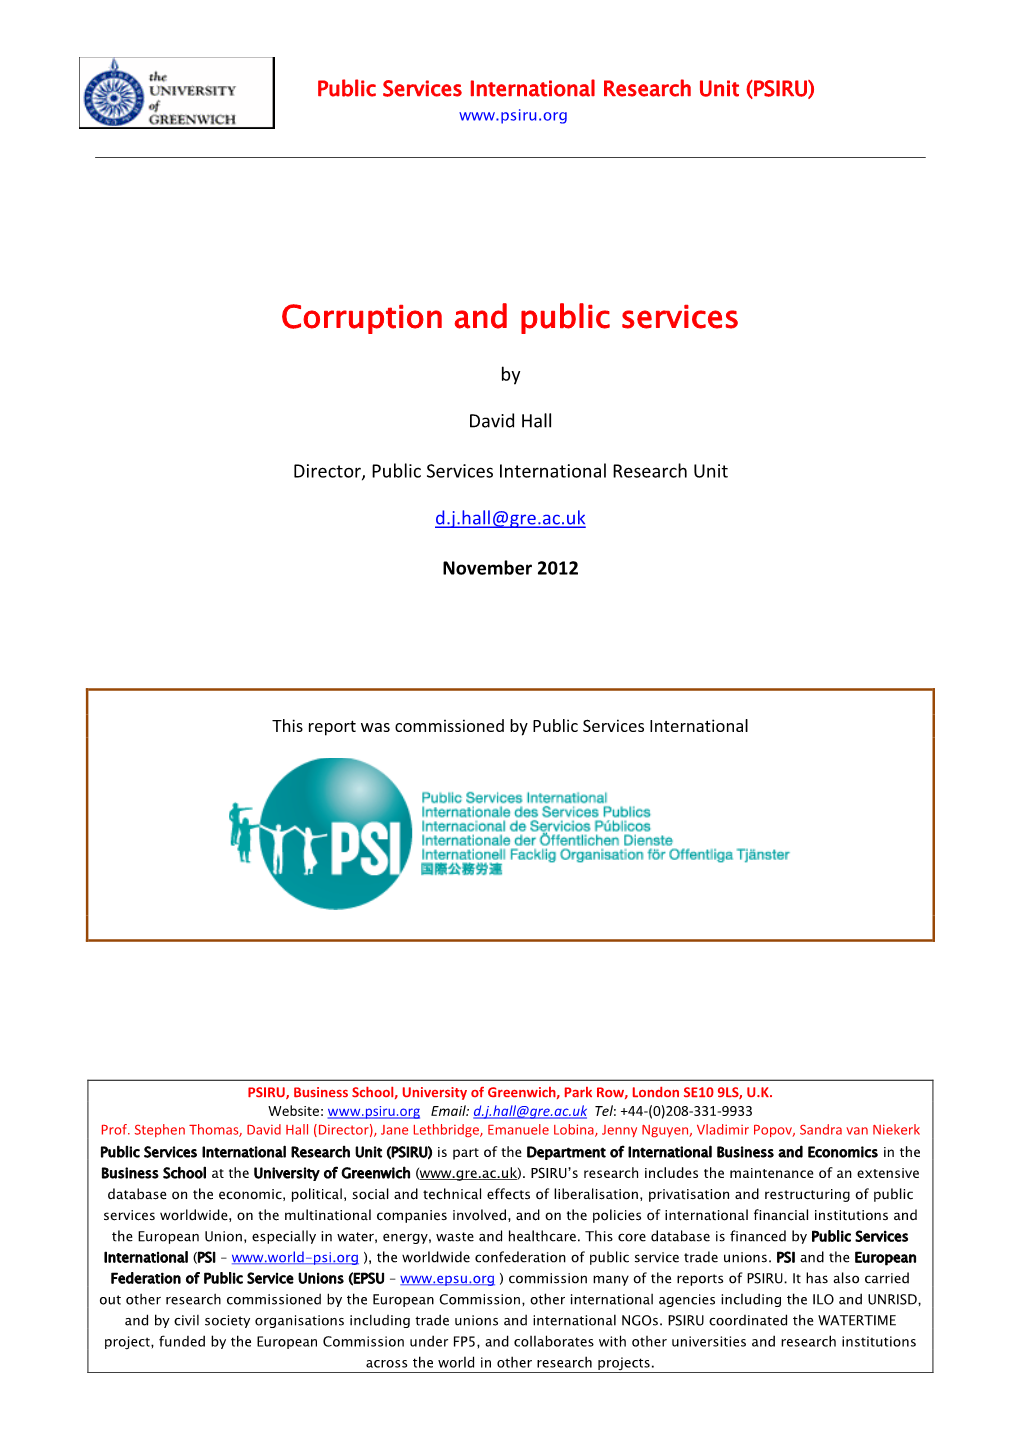 Corruption and Public Services